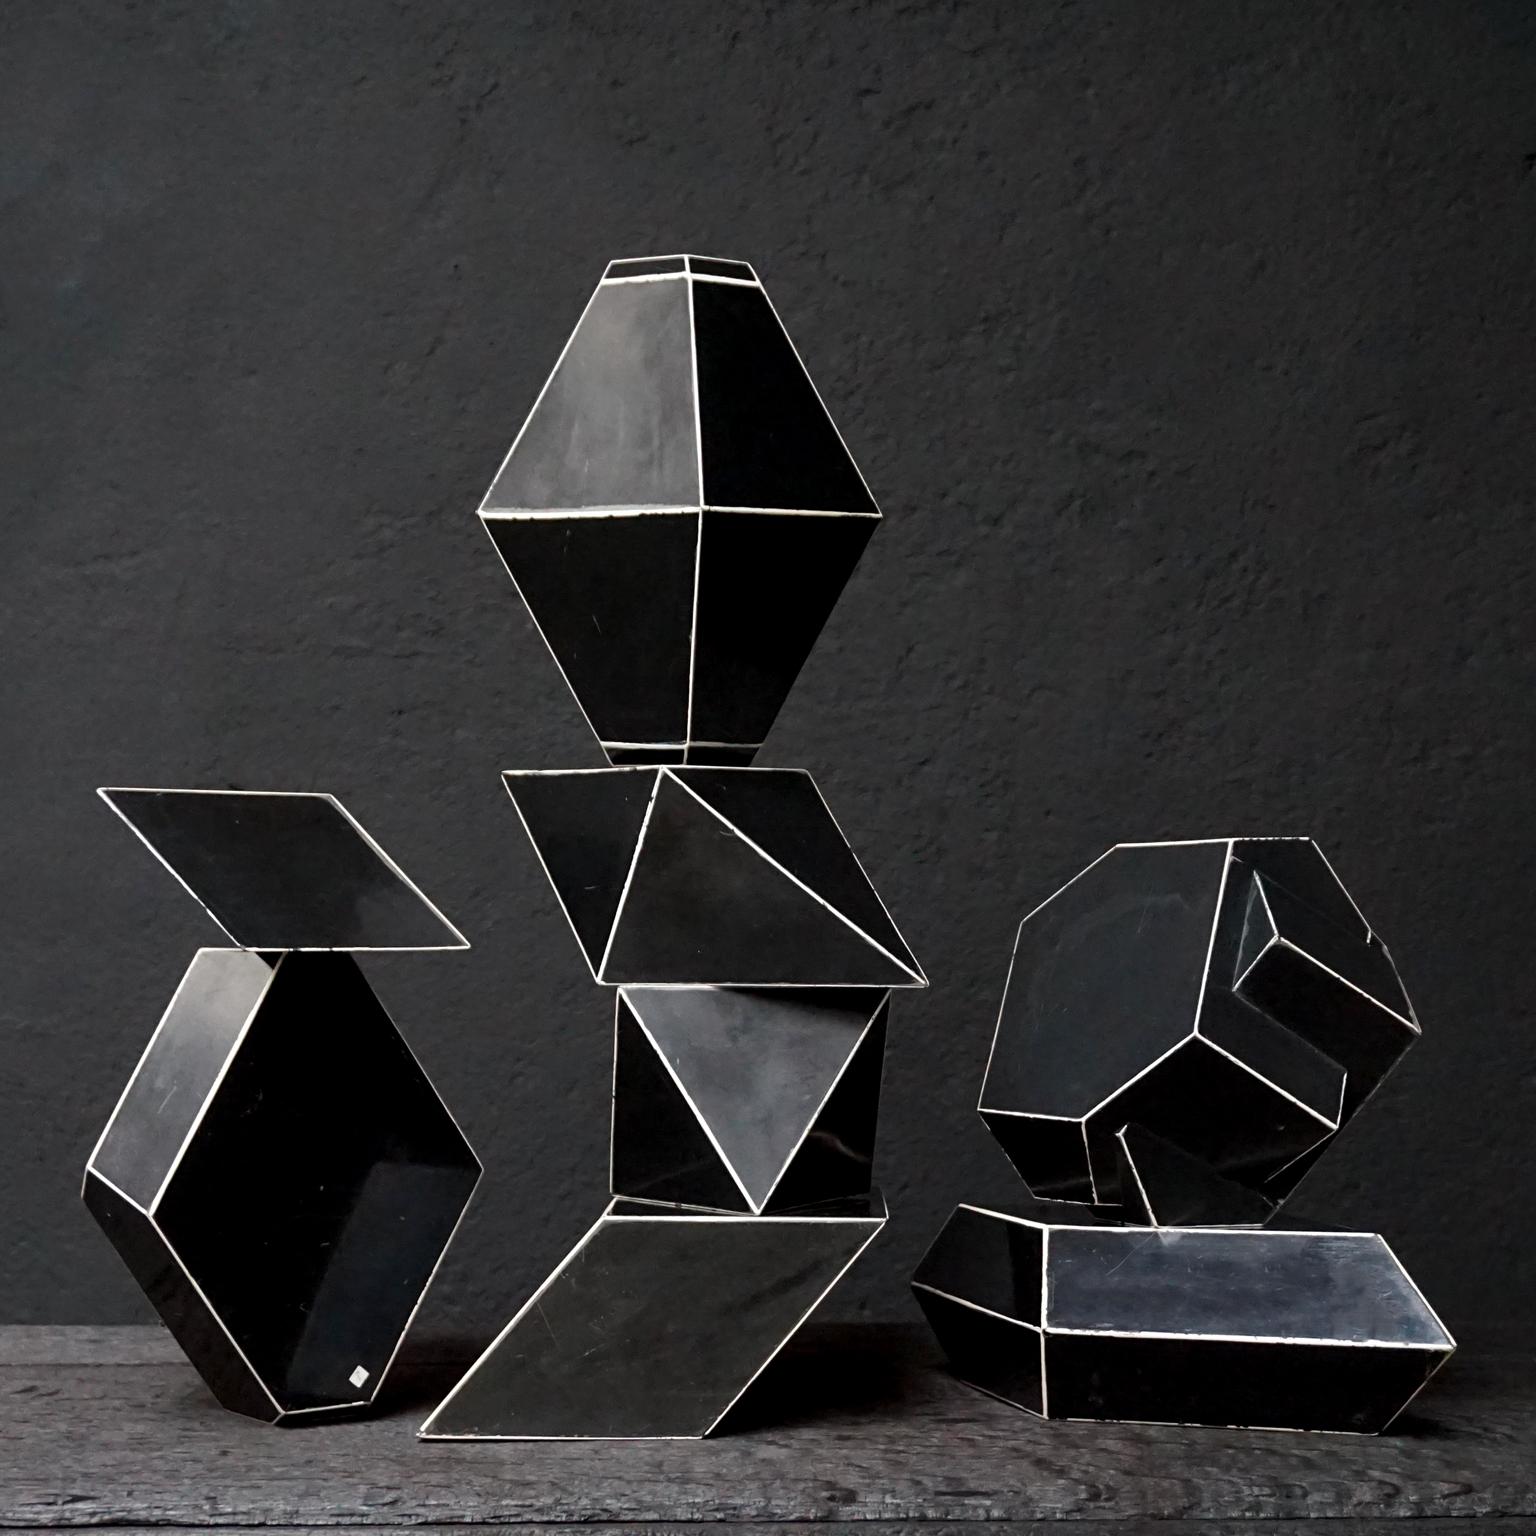 Fourteen French Geometric Bakelite Art Deco Science Classroom Crystal Models 5